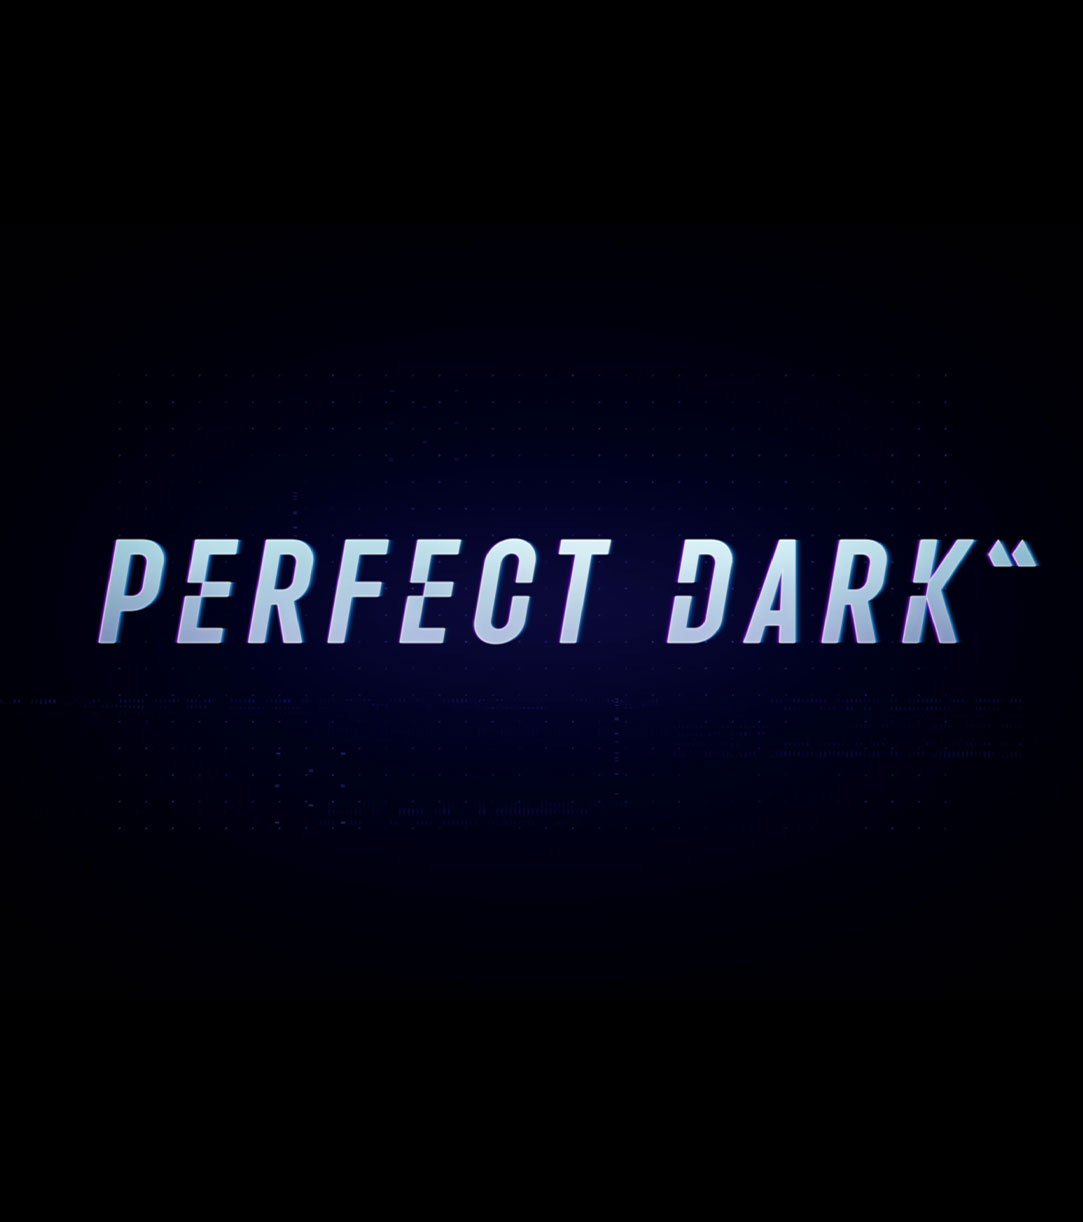 Animation of Perfect Dark logo glitching